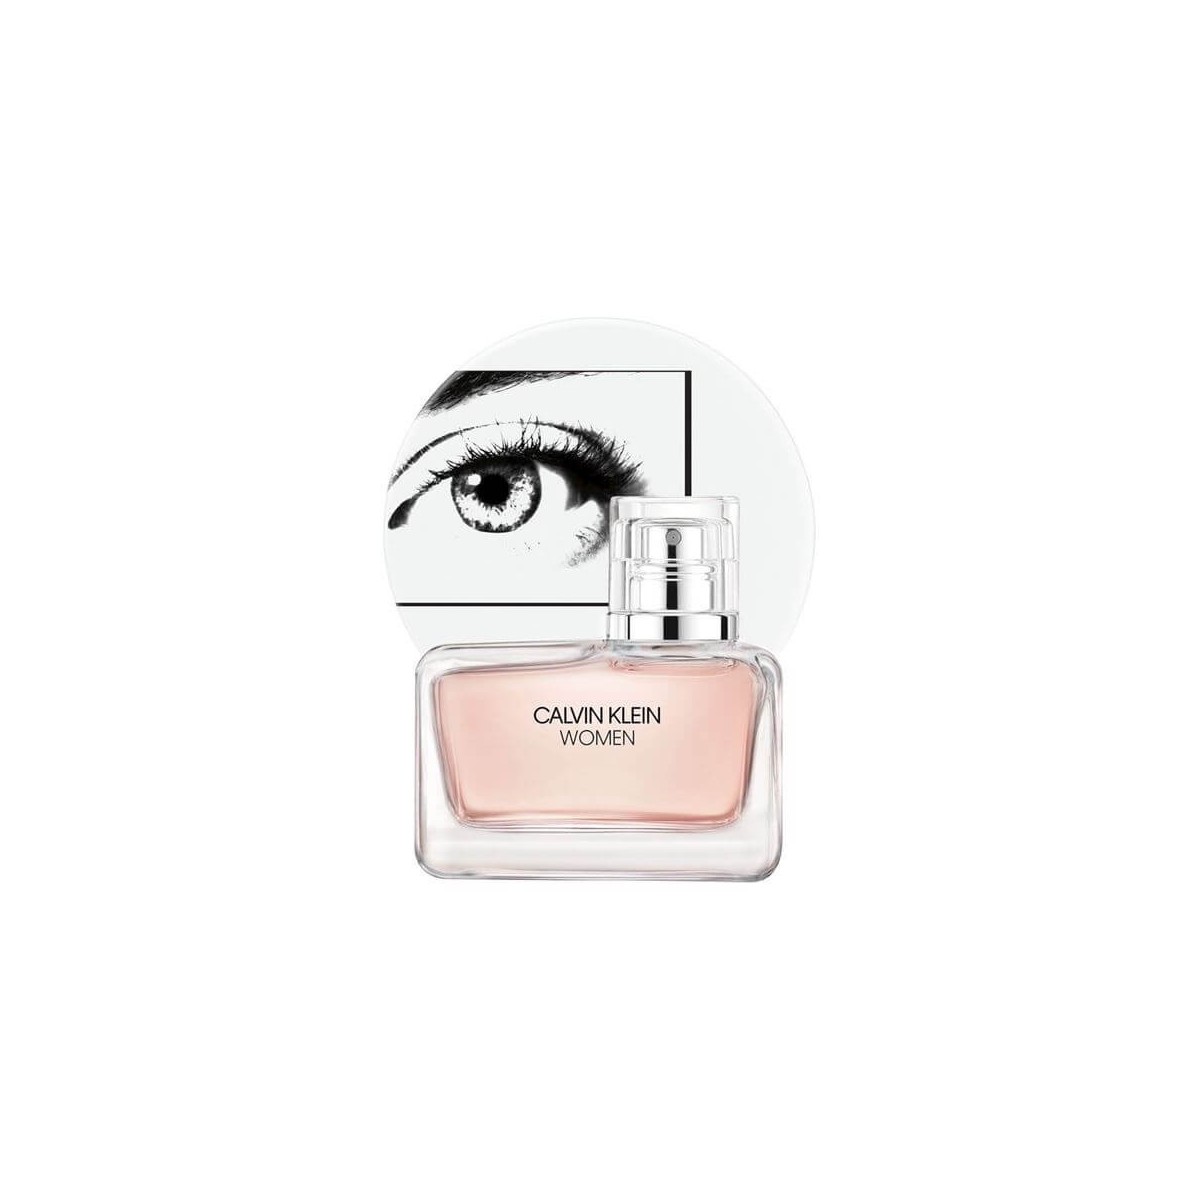 Calvin Klein Women Eau de Parfum 30ml spray